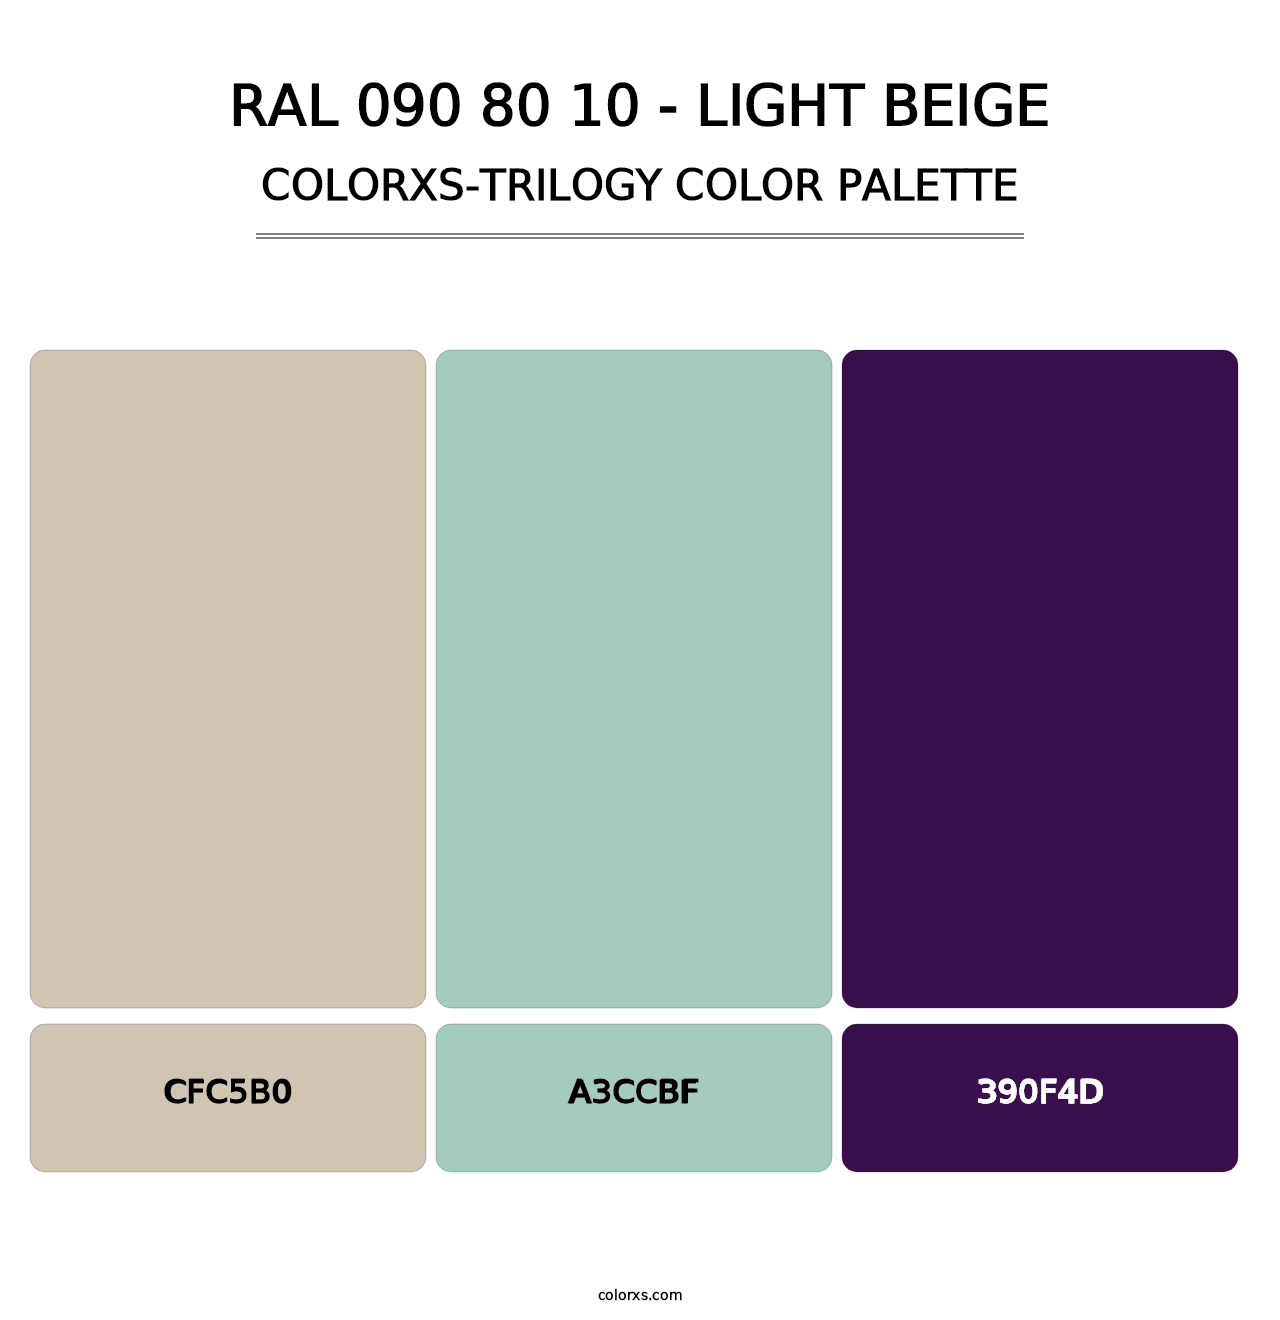 RAL 090 80 10 - Light Beige - Colorxs Trilogy Palette